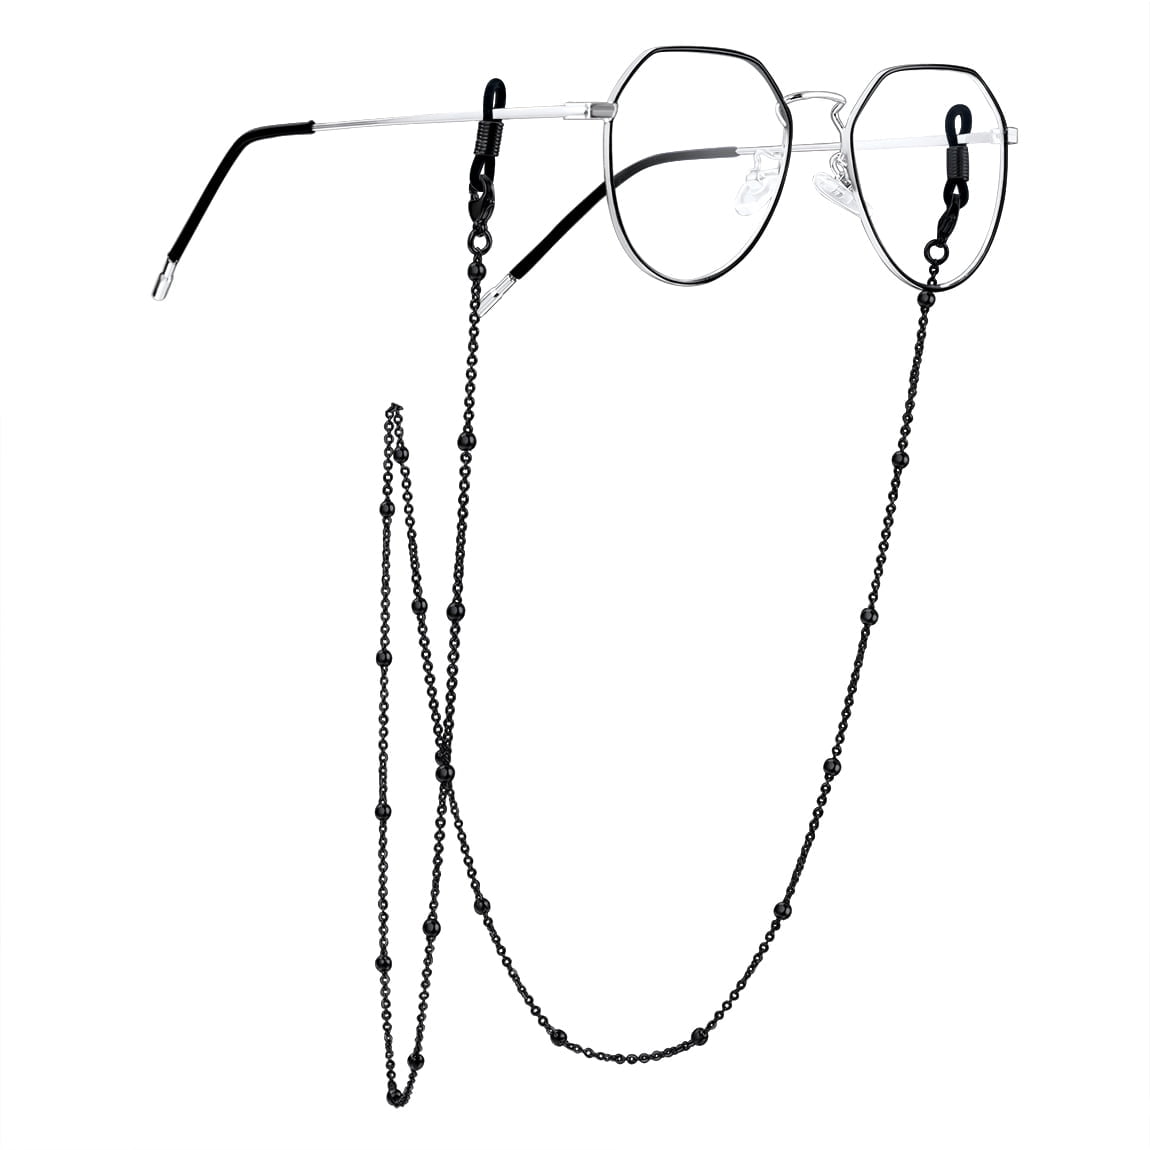 Berkley Sunglass Strap, Black; Fits Fishing Sunglasses for Men & Women 